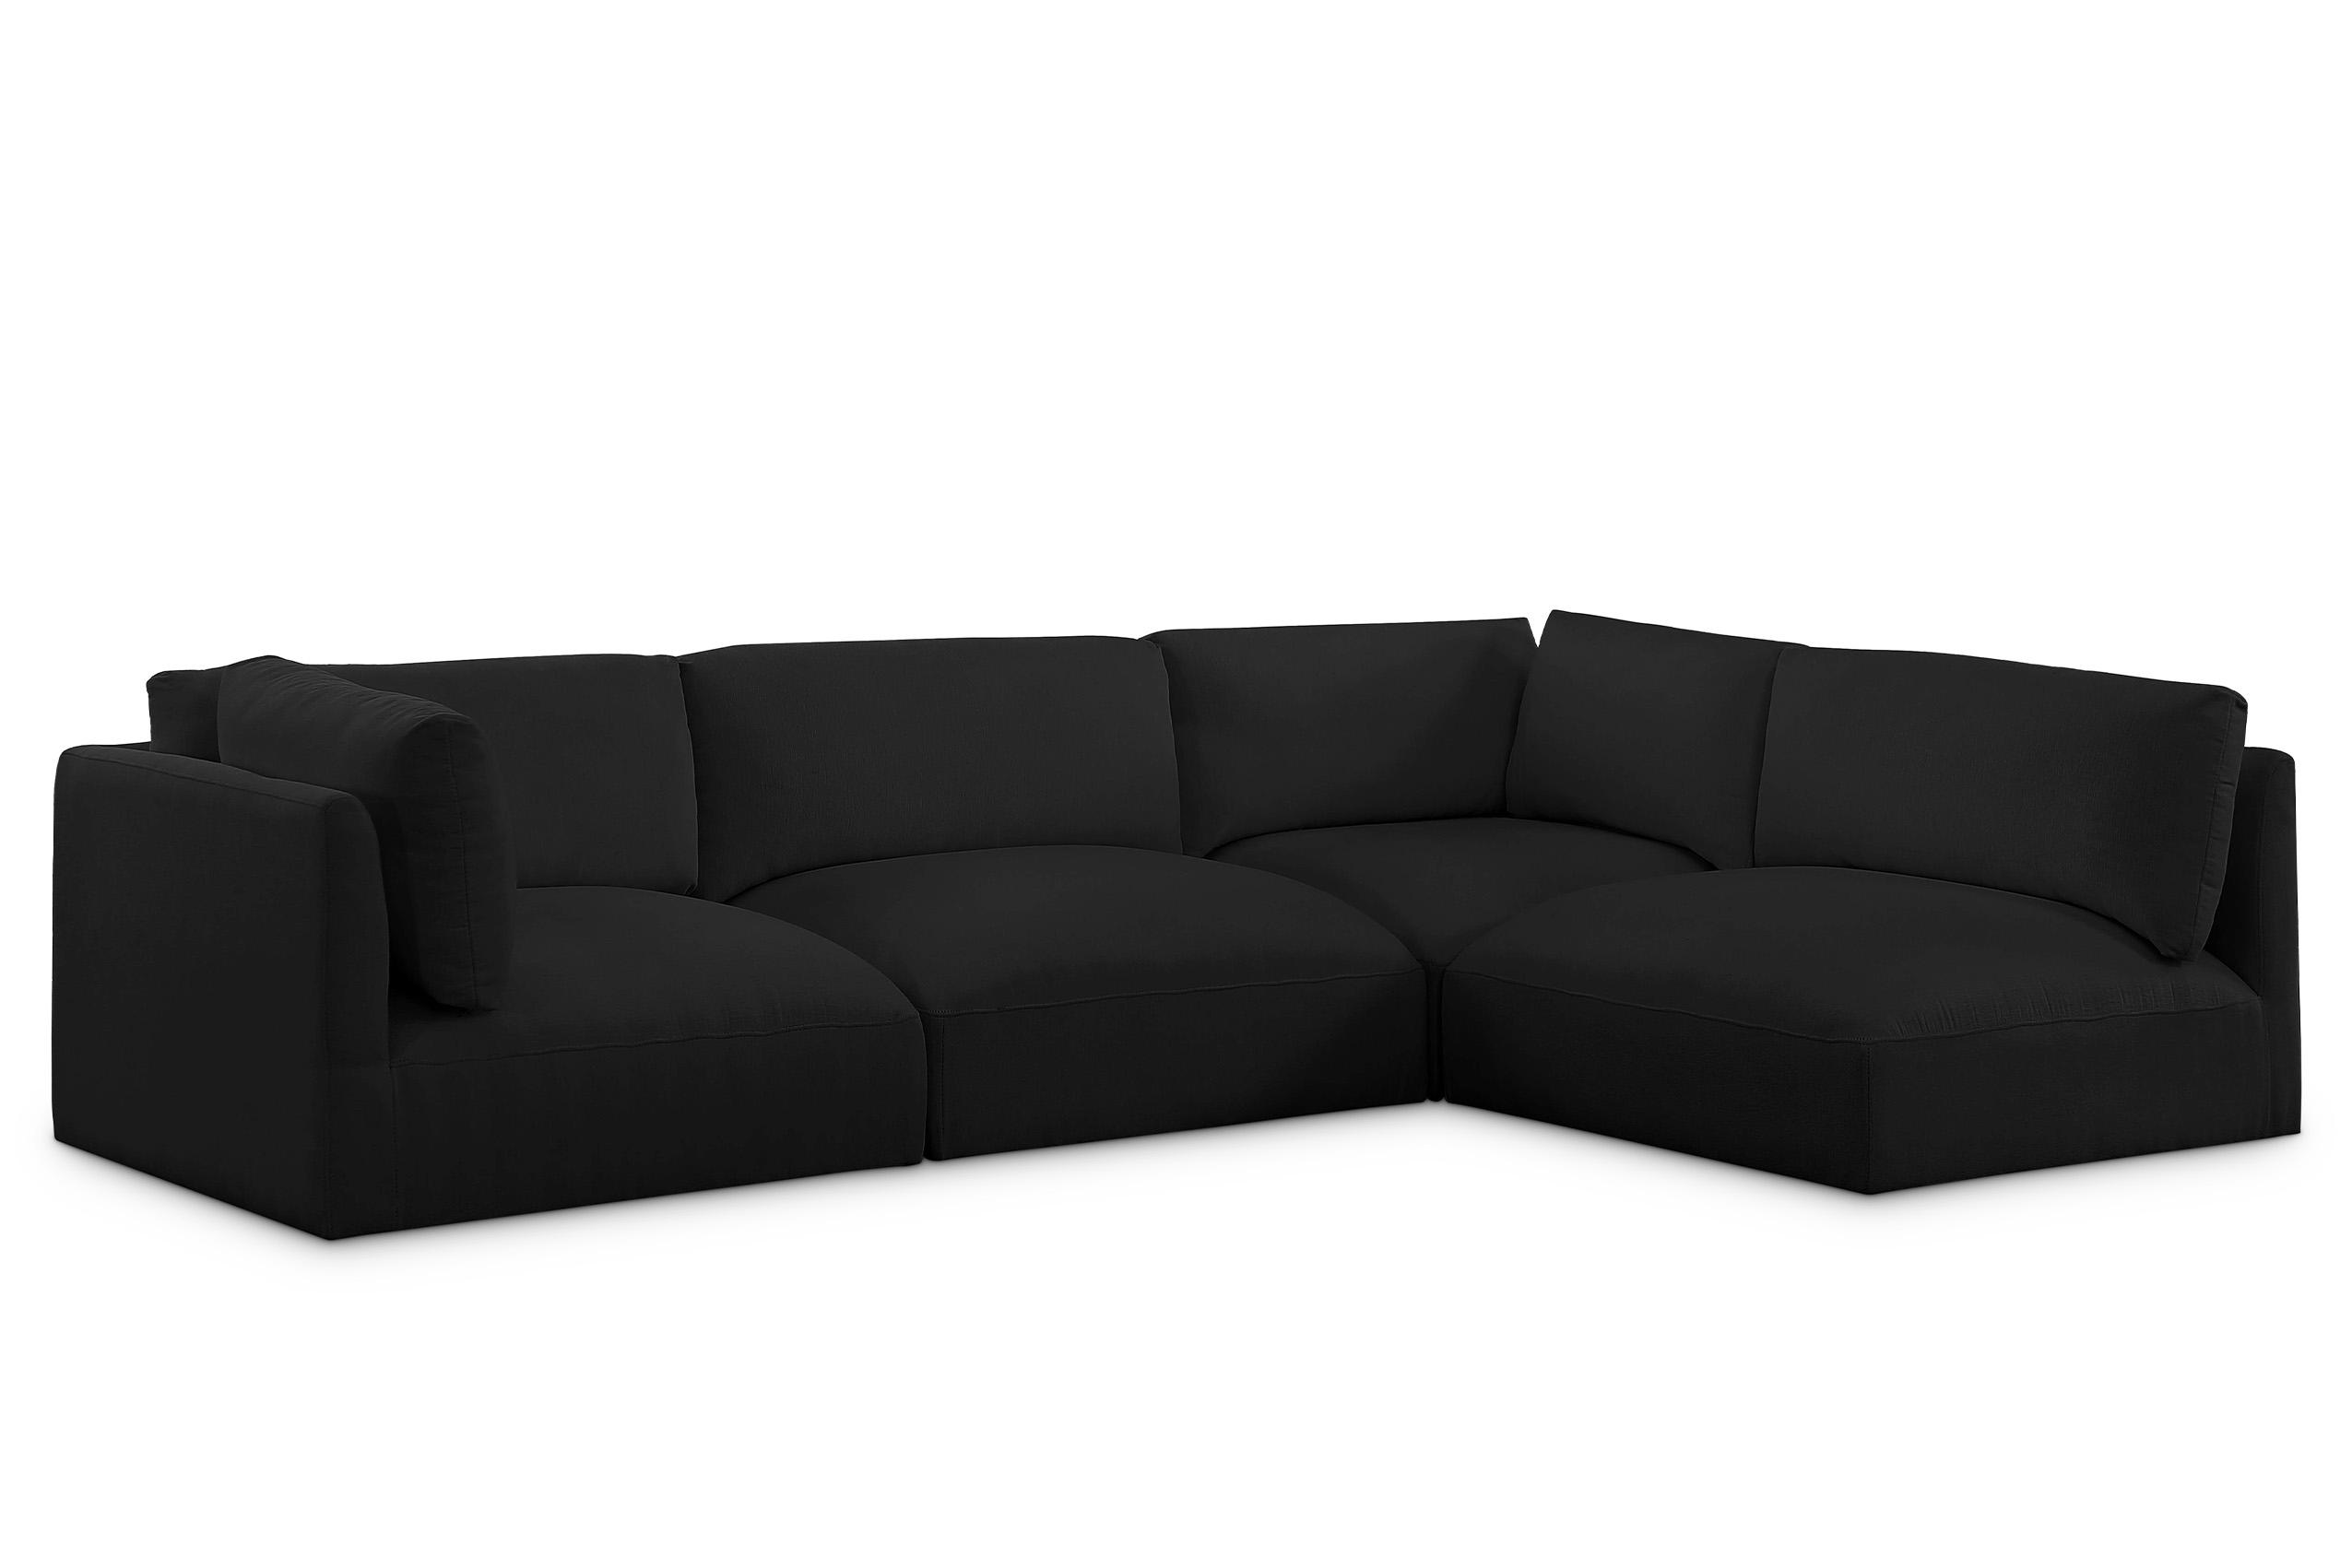 Contemporary, Modern Modular Sectional Sofa EASE 696Black-Sec4B 696Black-Sec4B in Black Fabric